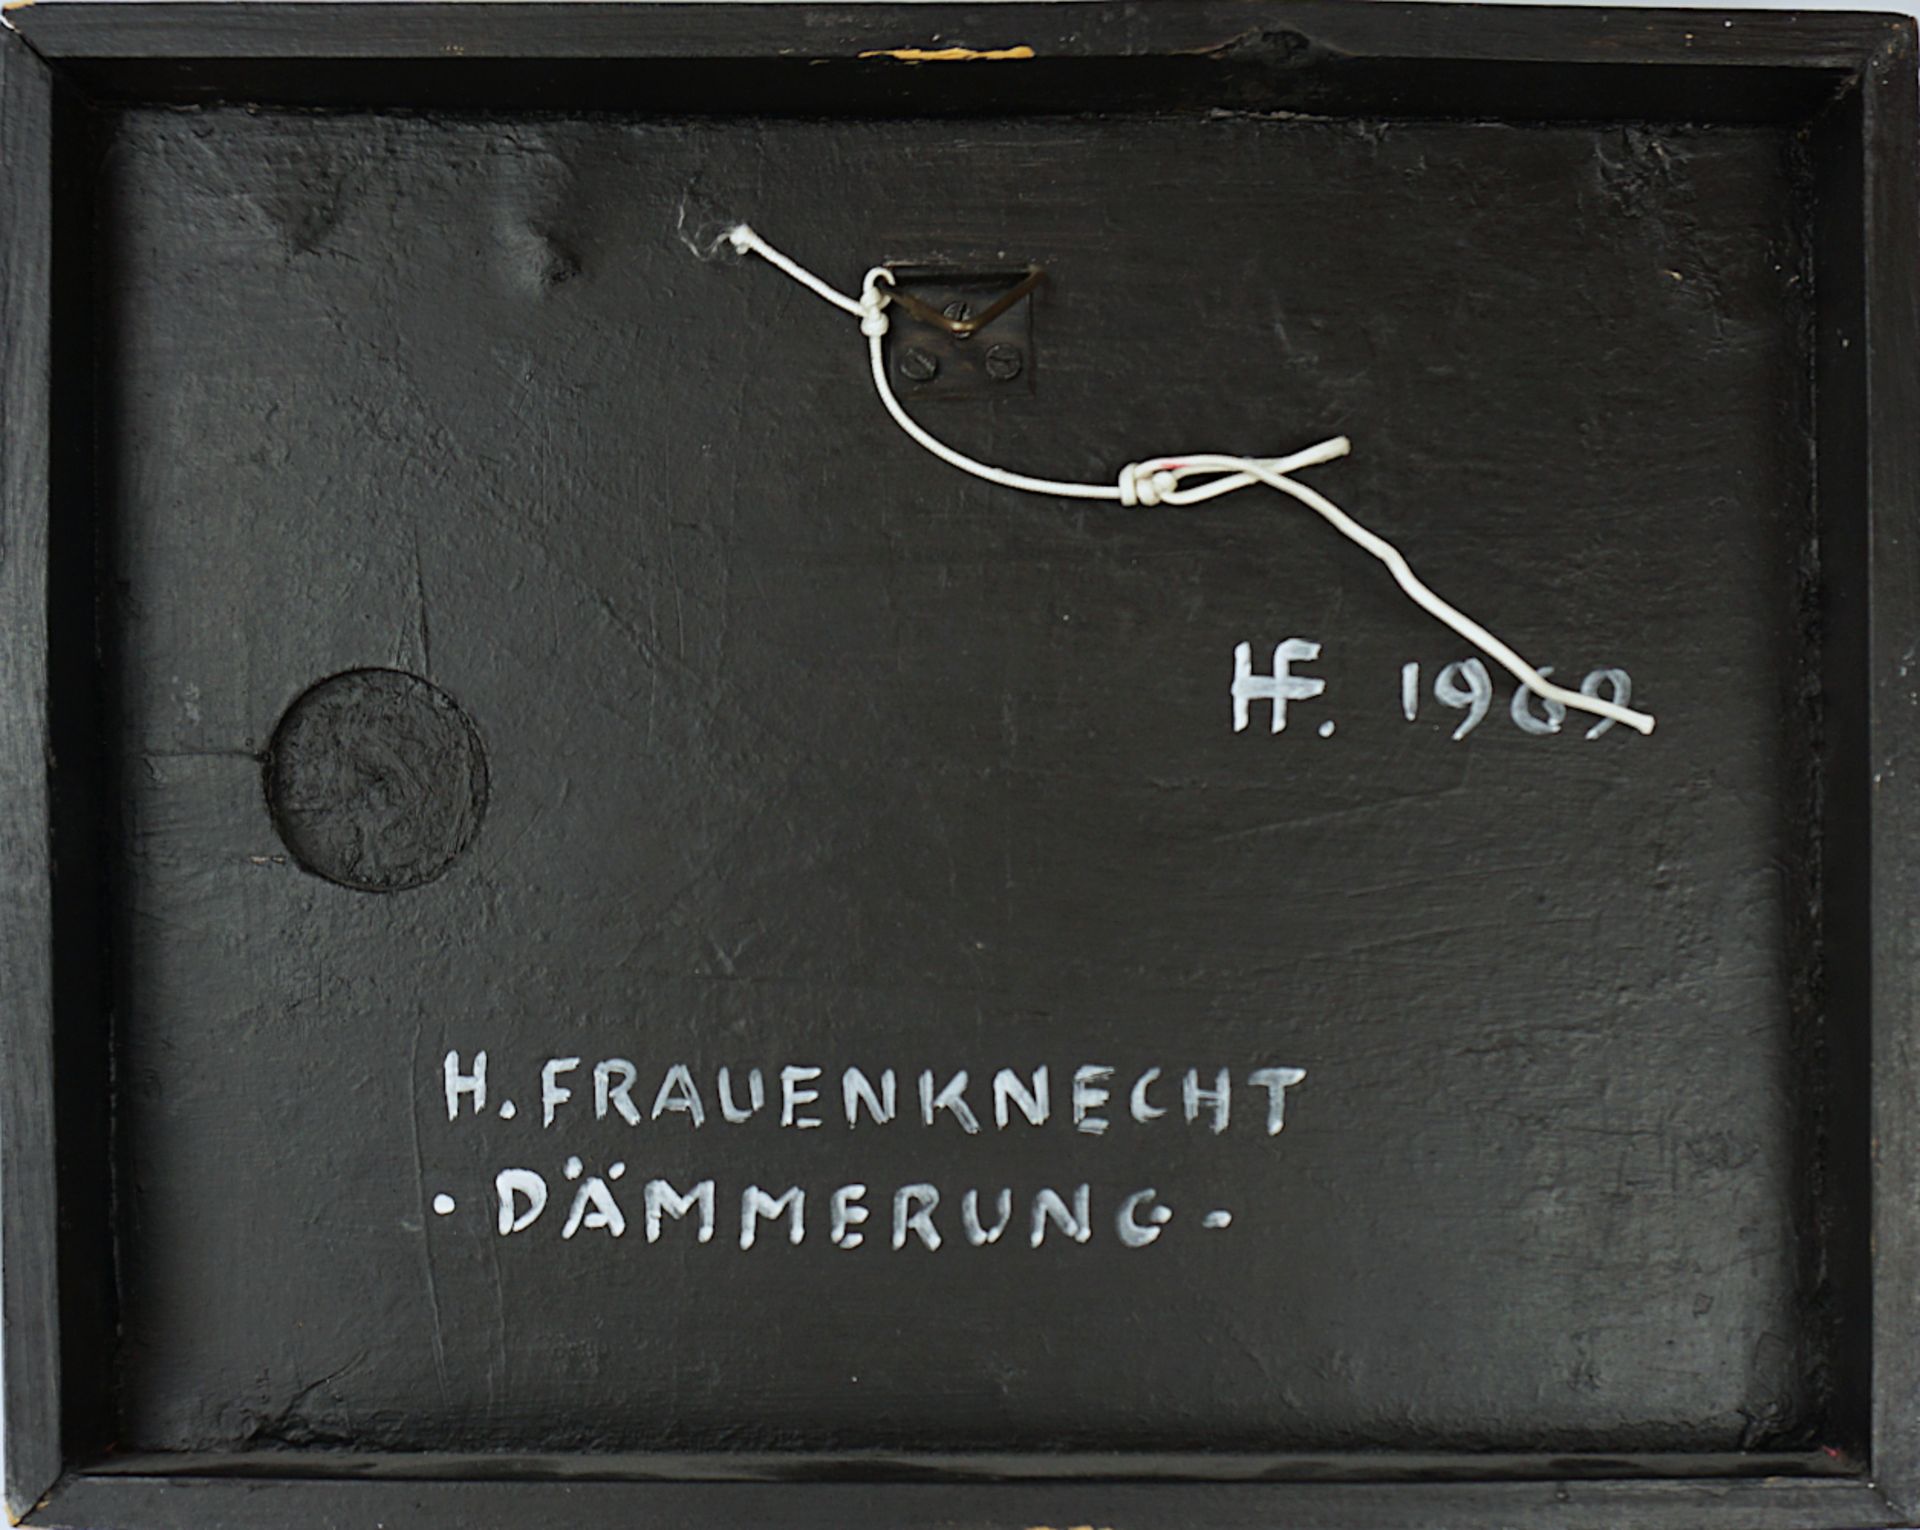 1 Steinbild/Kunstobjekt "Dämmerung" rücks. zugeschrieben H. FRAUENKNECHT - Image 2 of 2